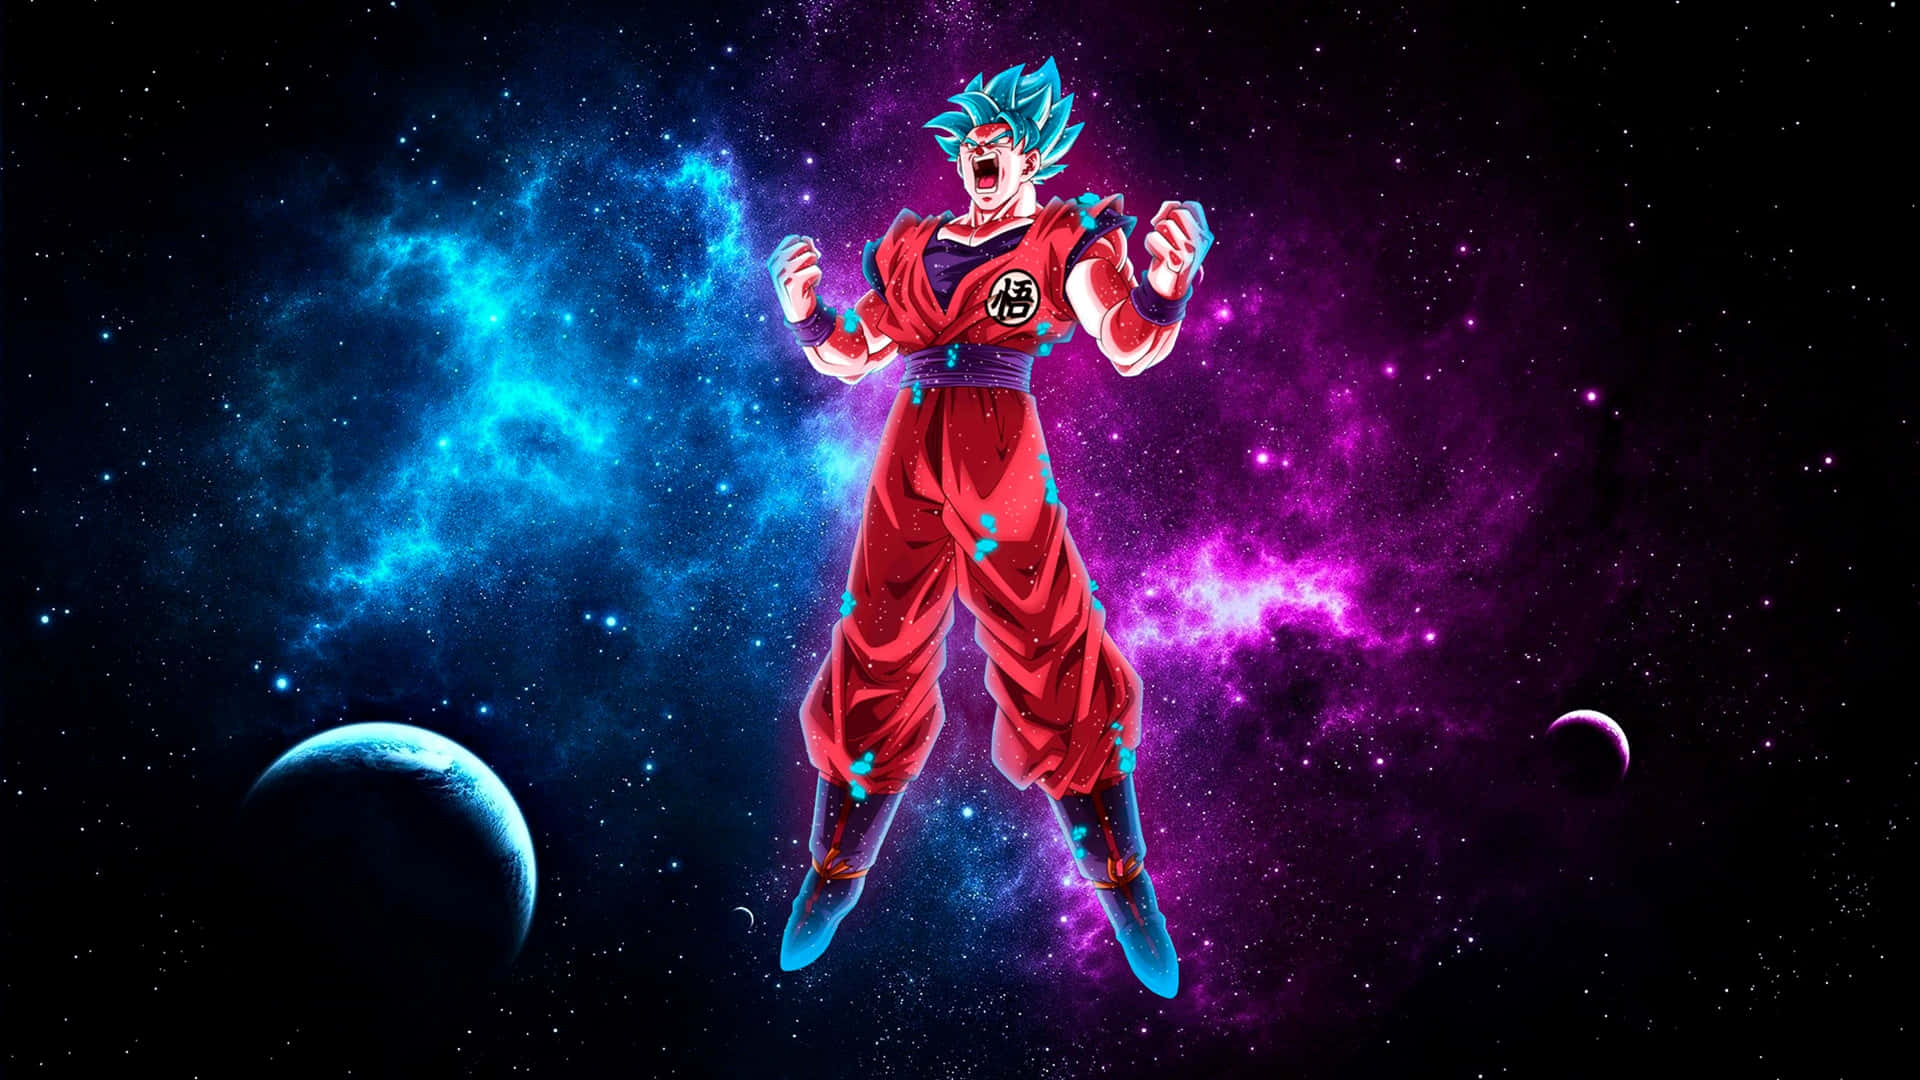 Hintergrundbildvon Goku